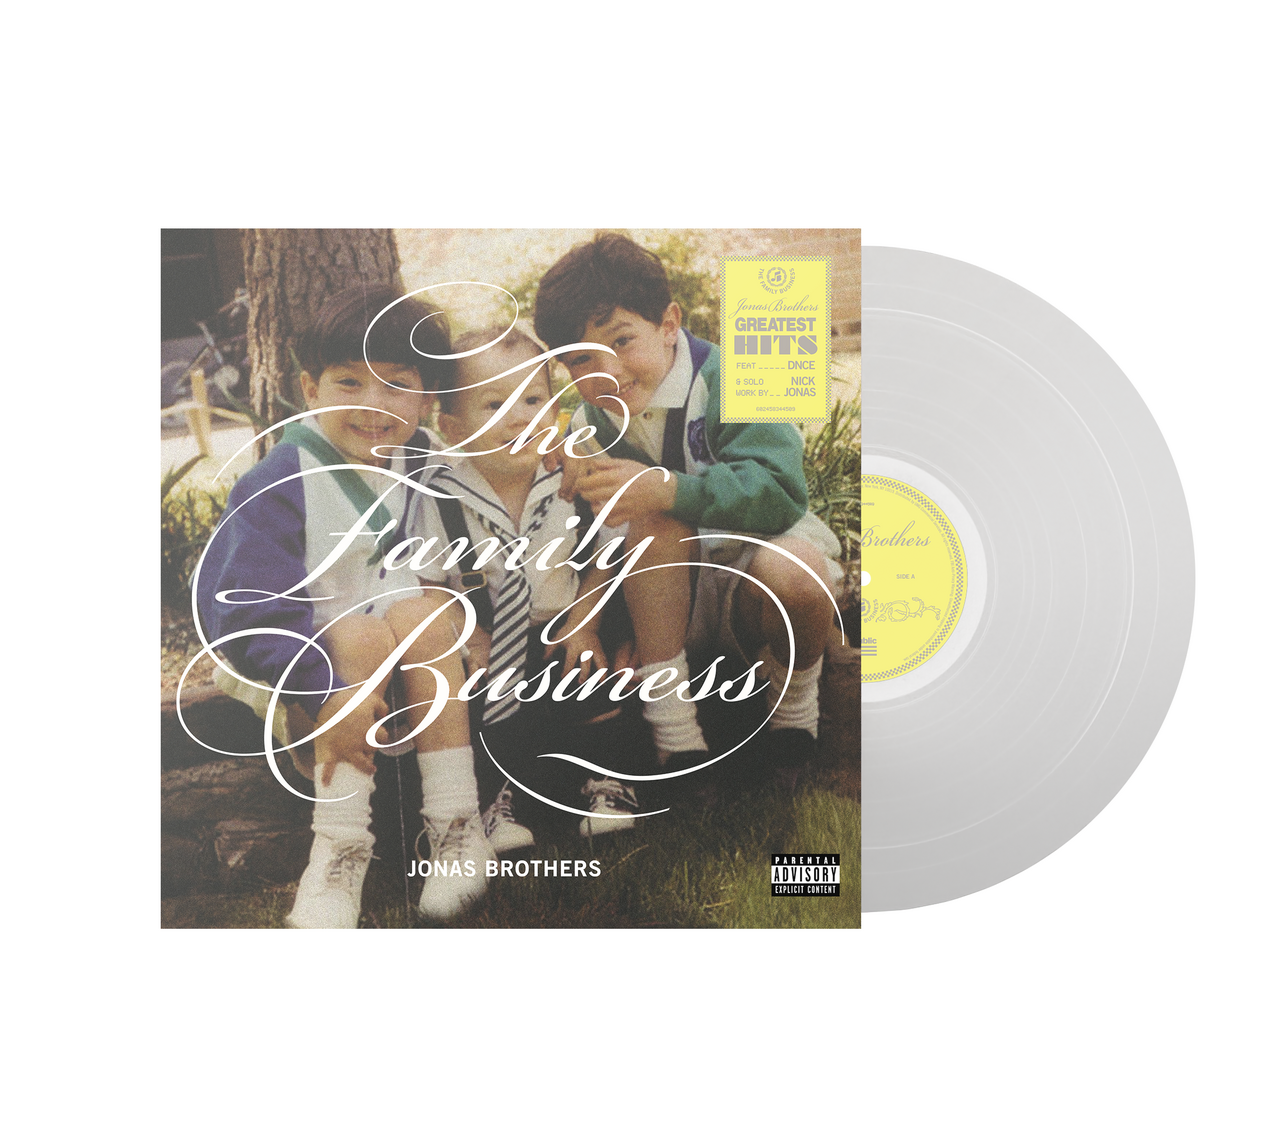 Jonas Brothers - The Family Business: Vinyl LP